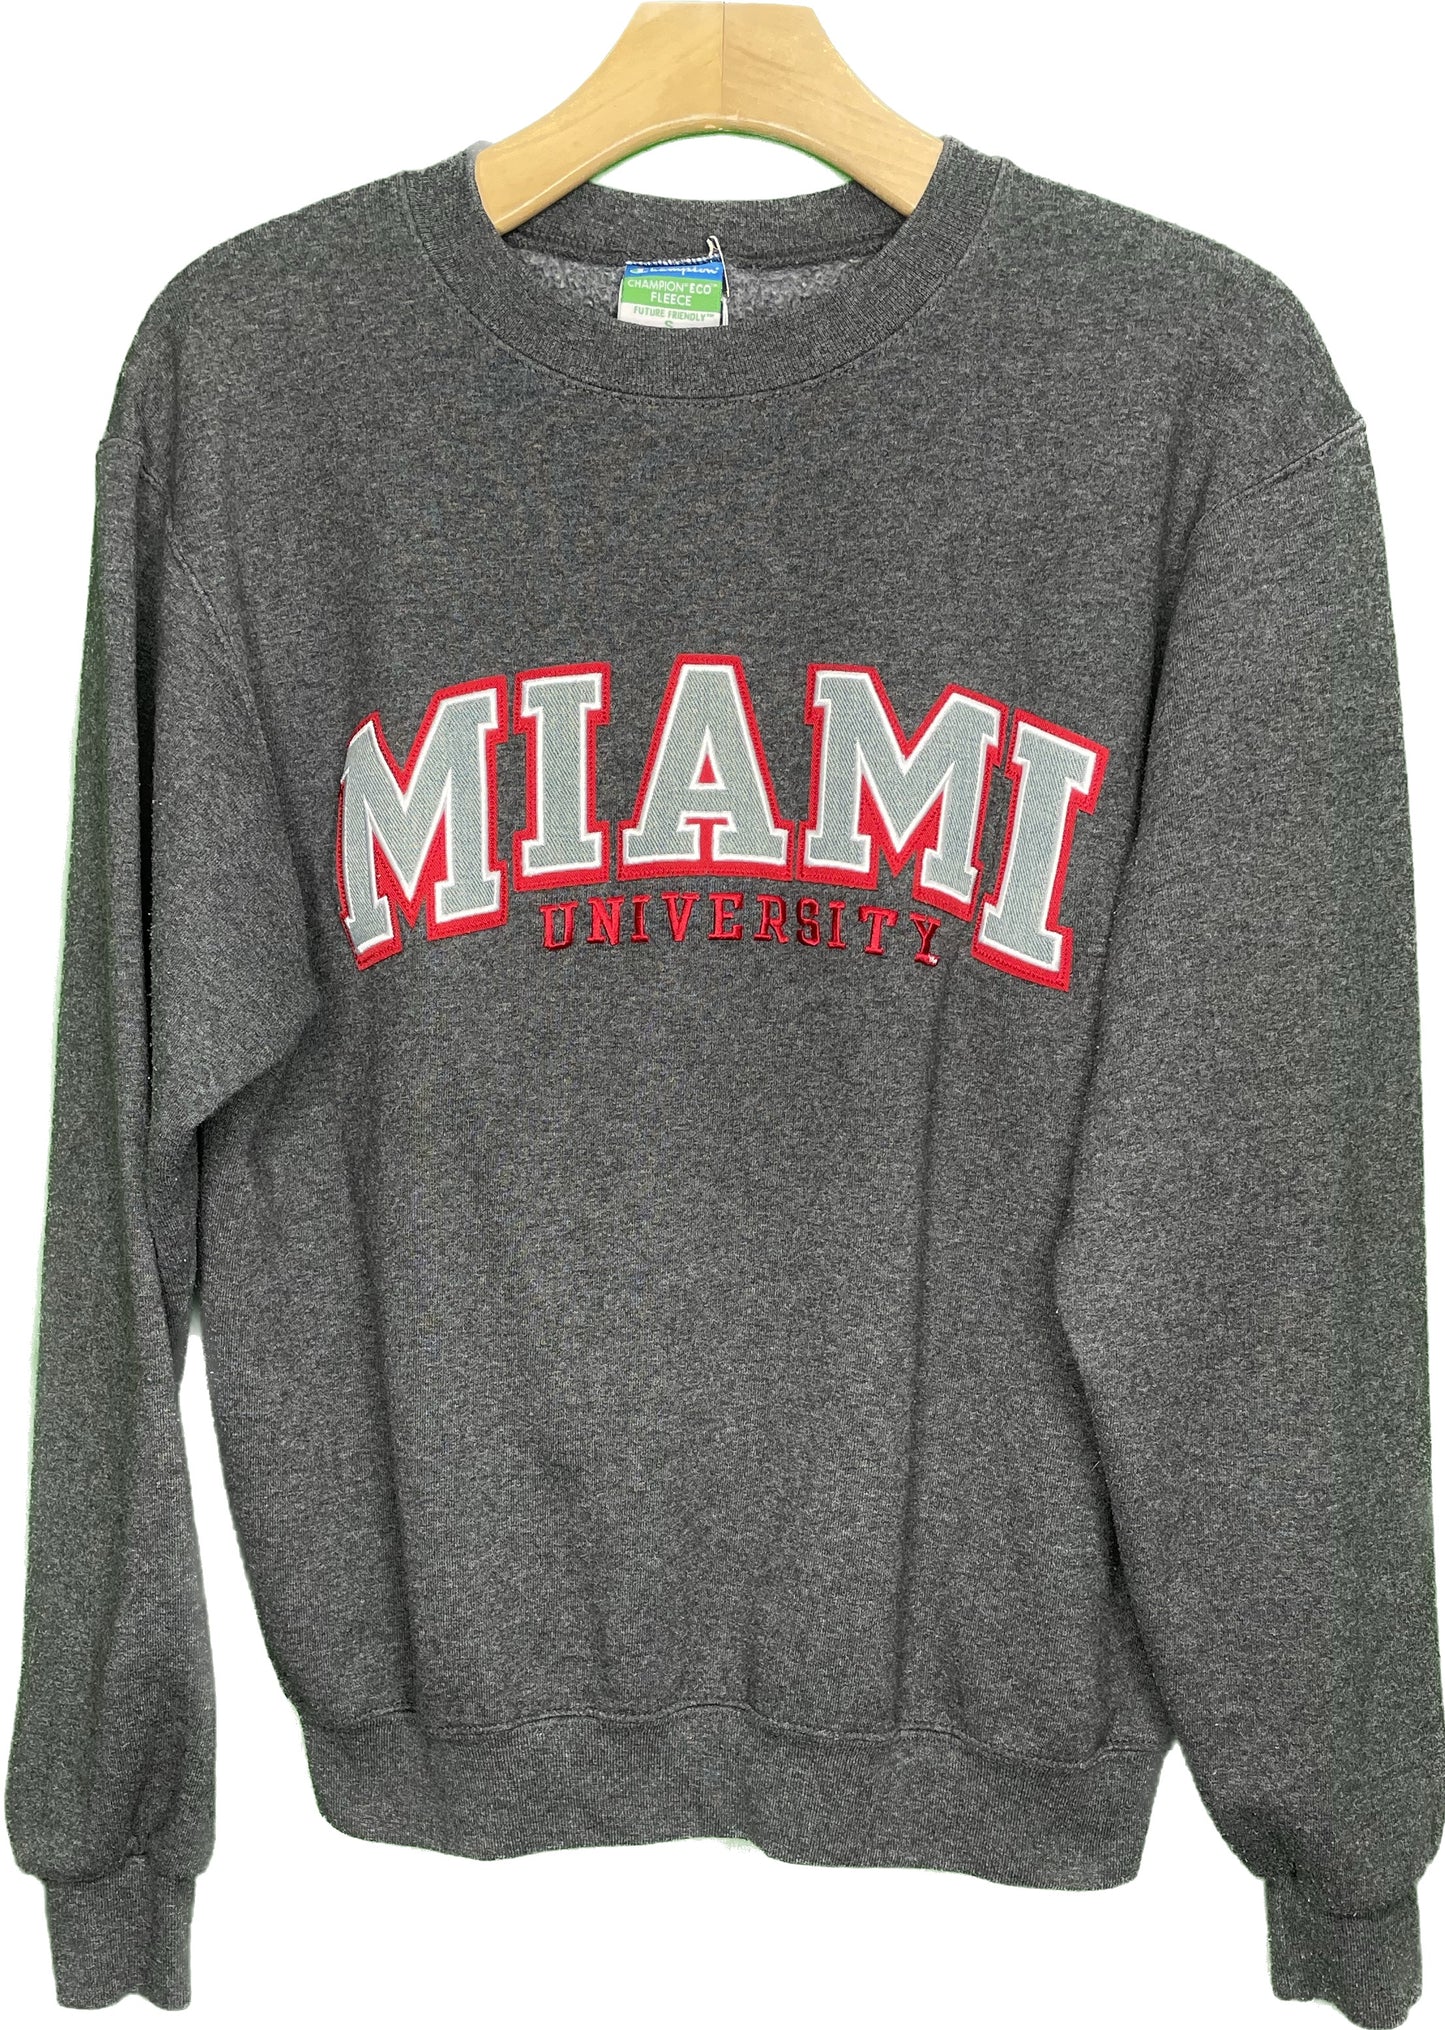 Vintage M/L Miami University Embroidered Sweatshirt College